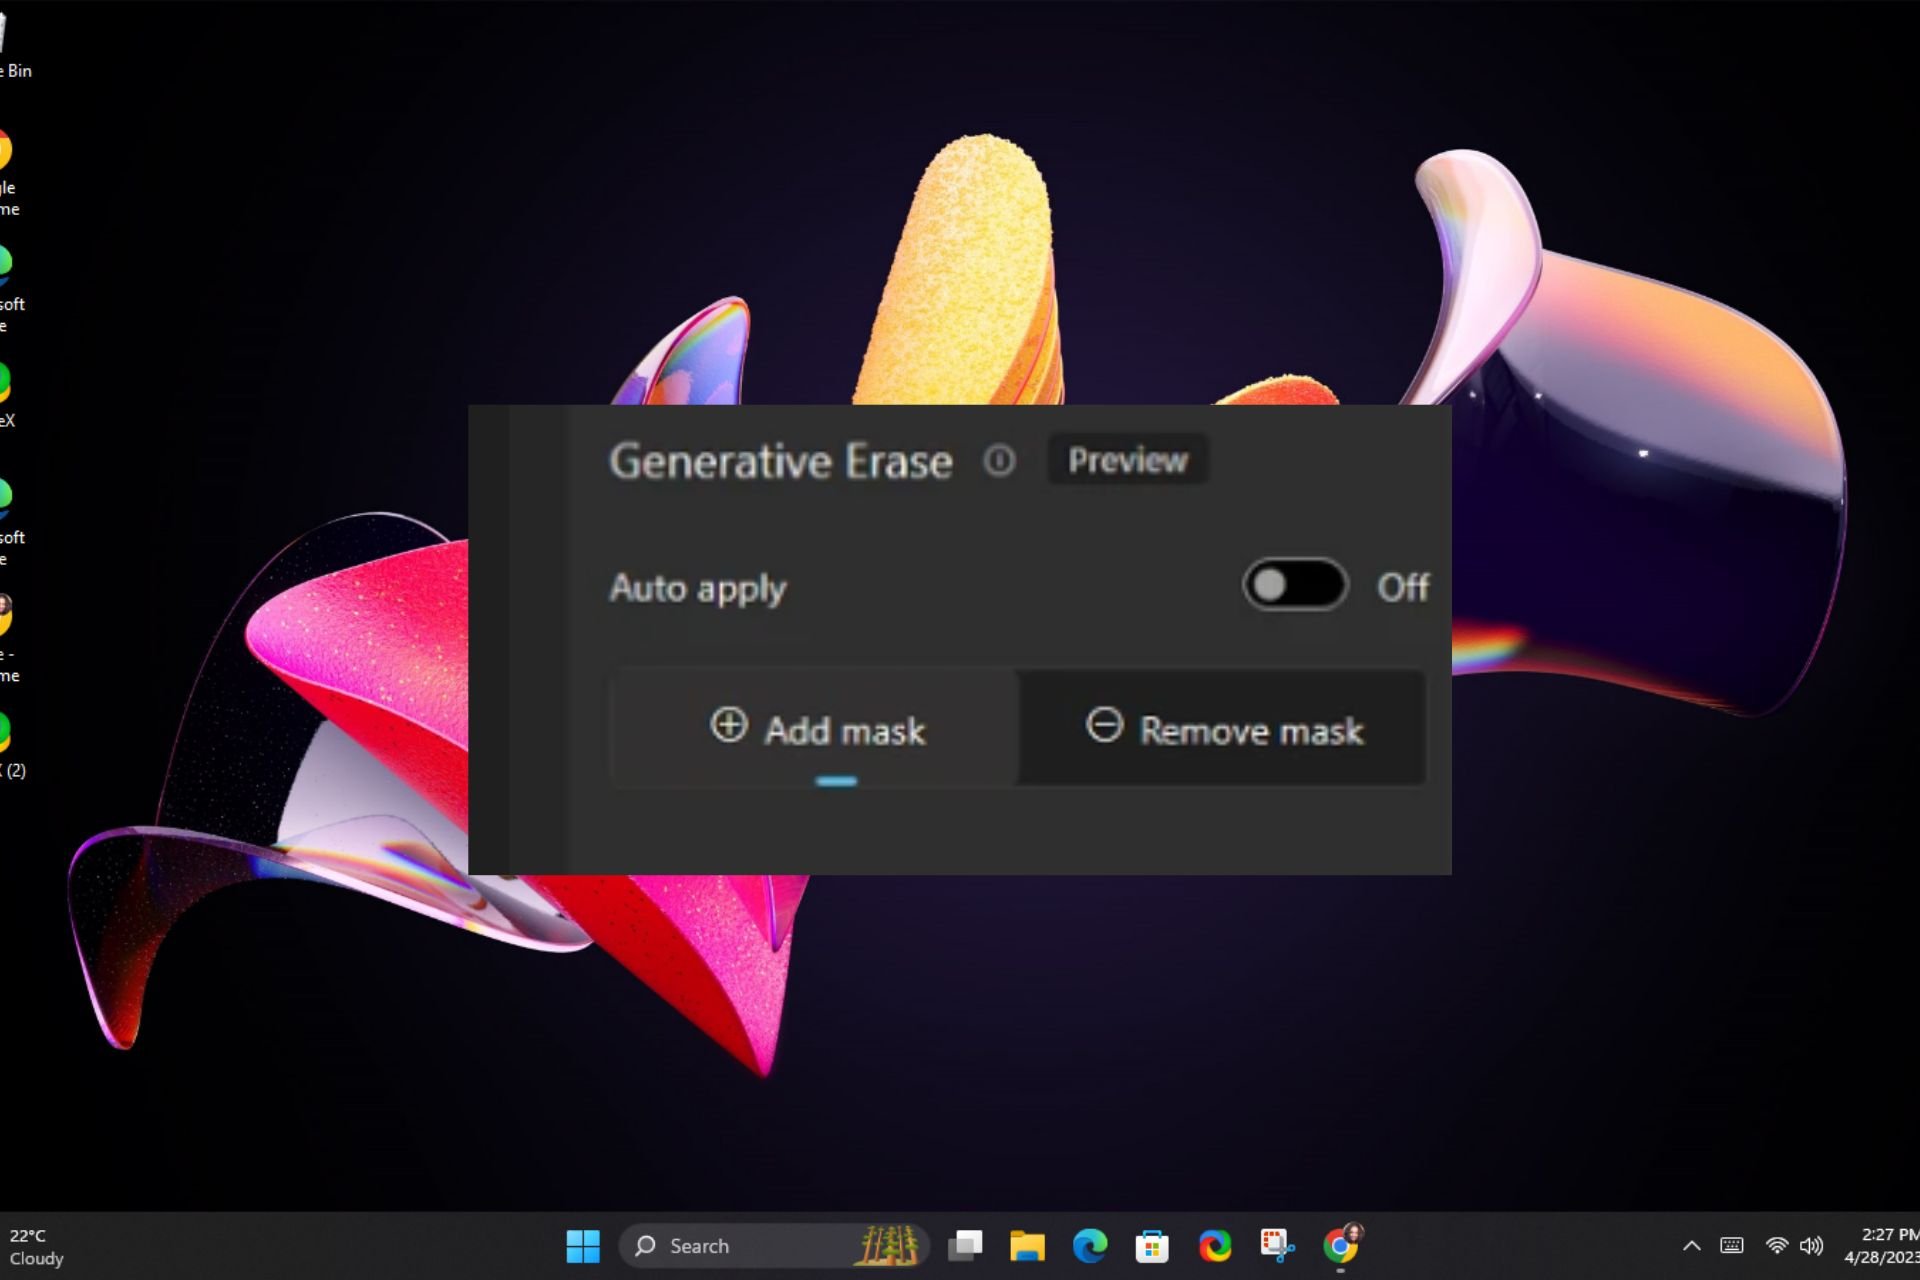 How to Use Generative Erase in Windows 11 Photos App